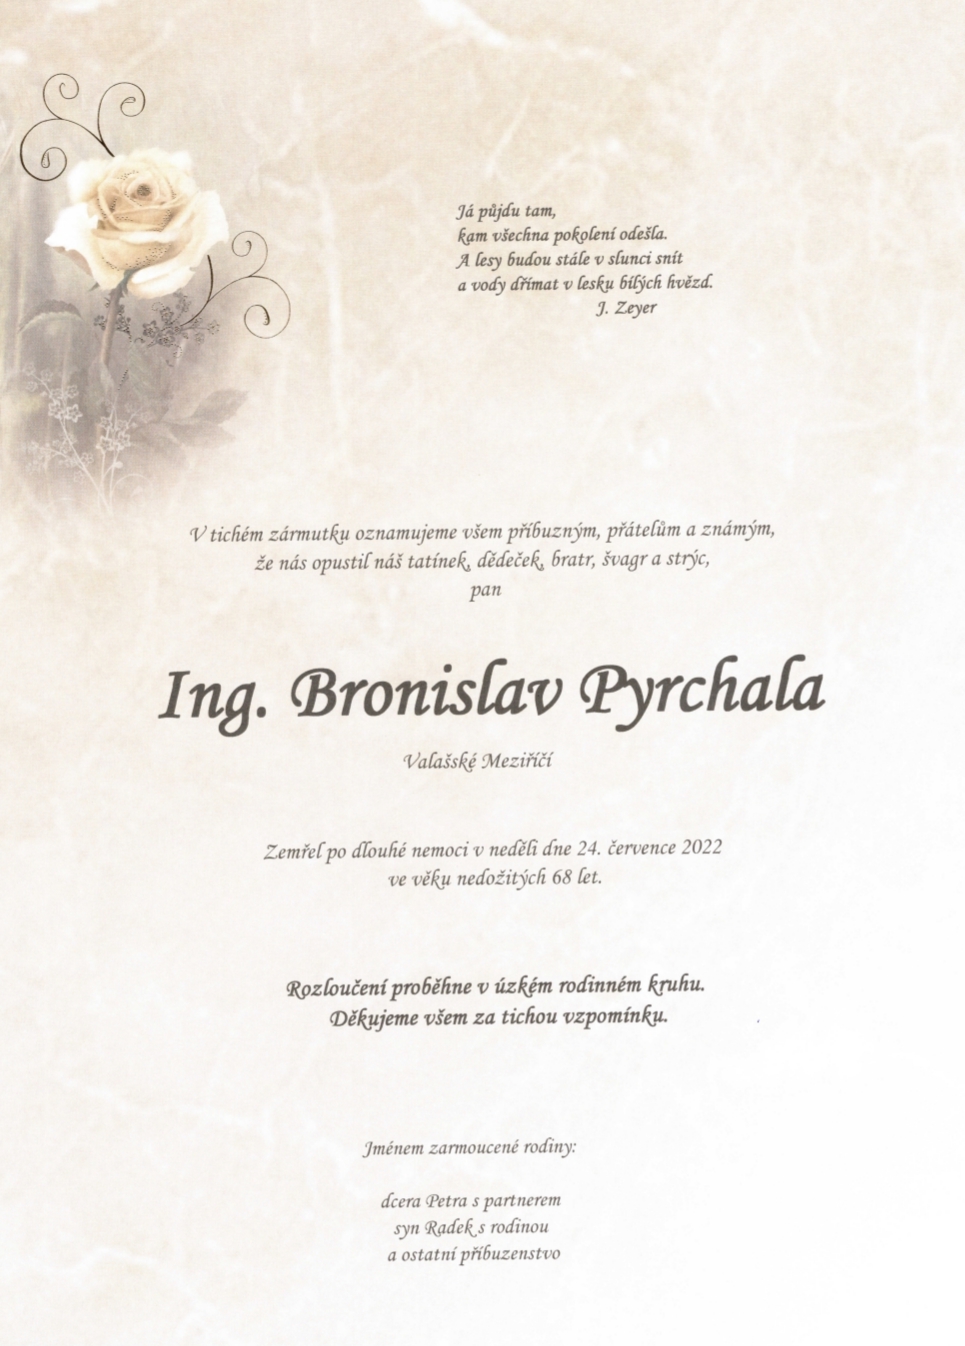 Ing. Bronislav Pyrchala